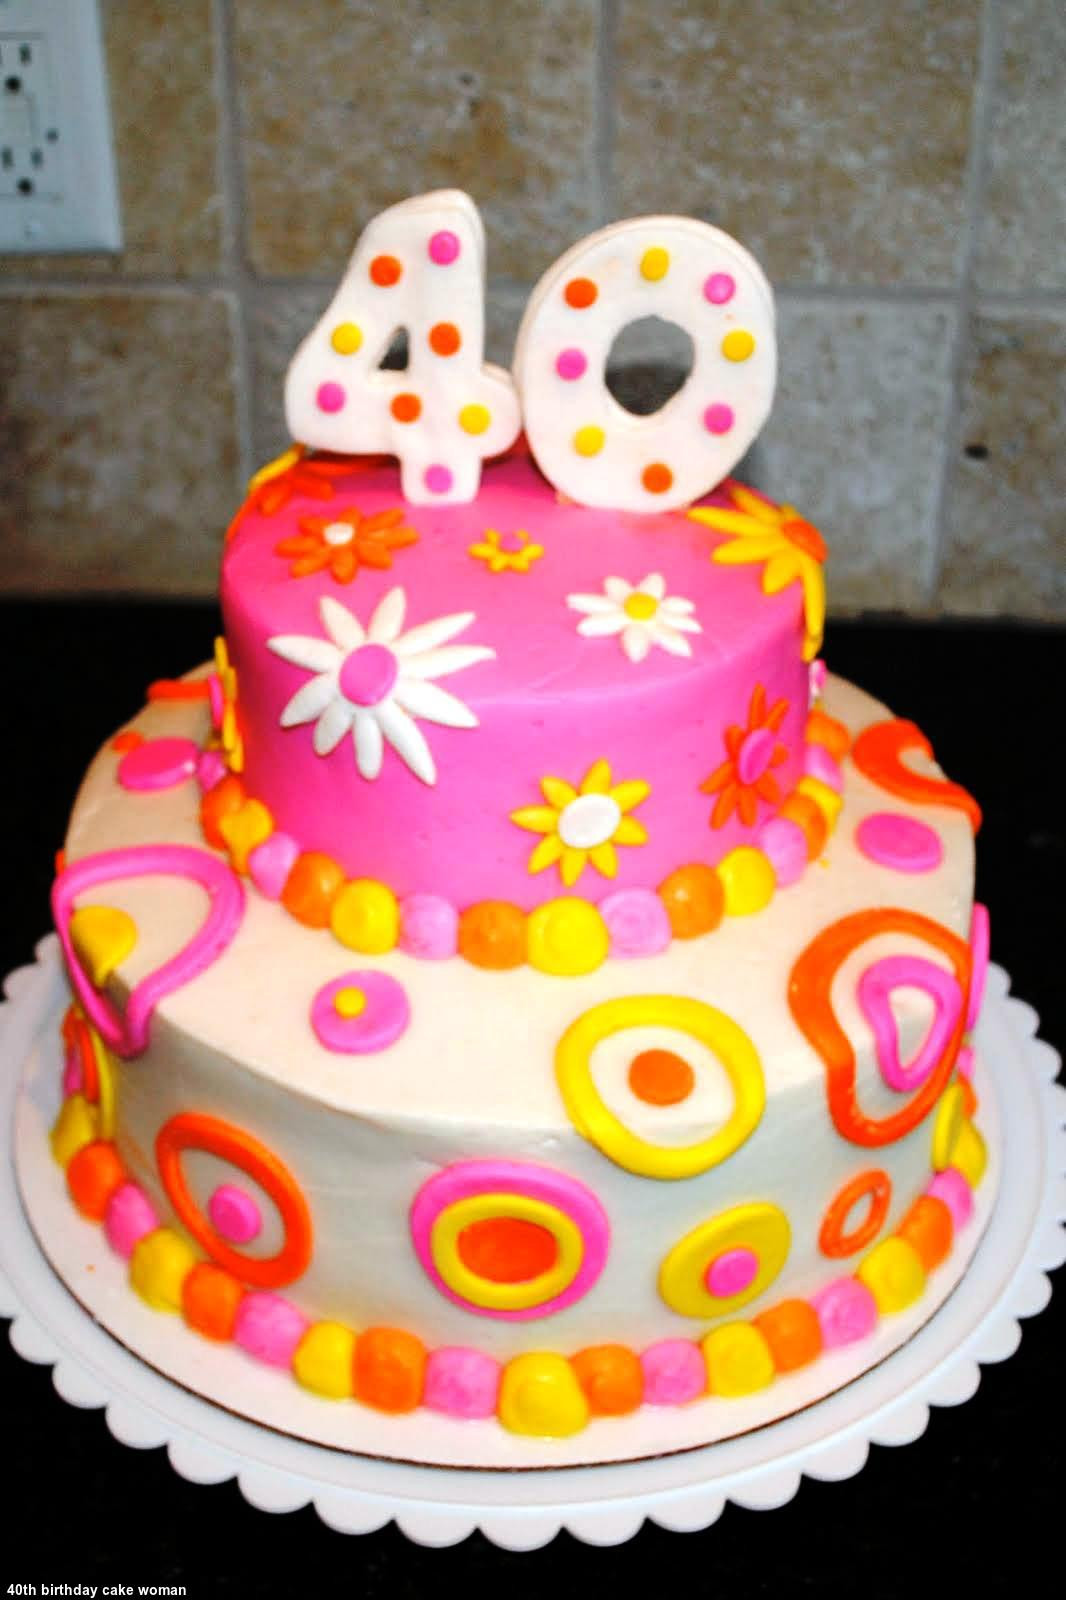 40th Birthday Cake Ideas Funny
 40th Birthday Cake Woman Insipiration 2015 The Best